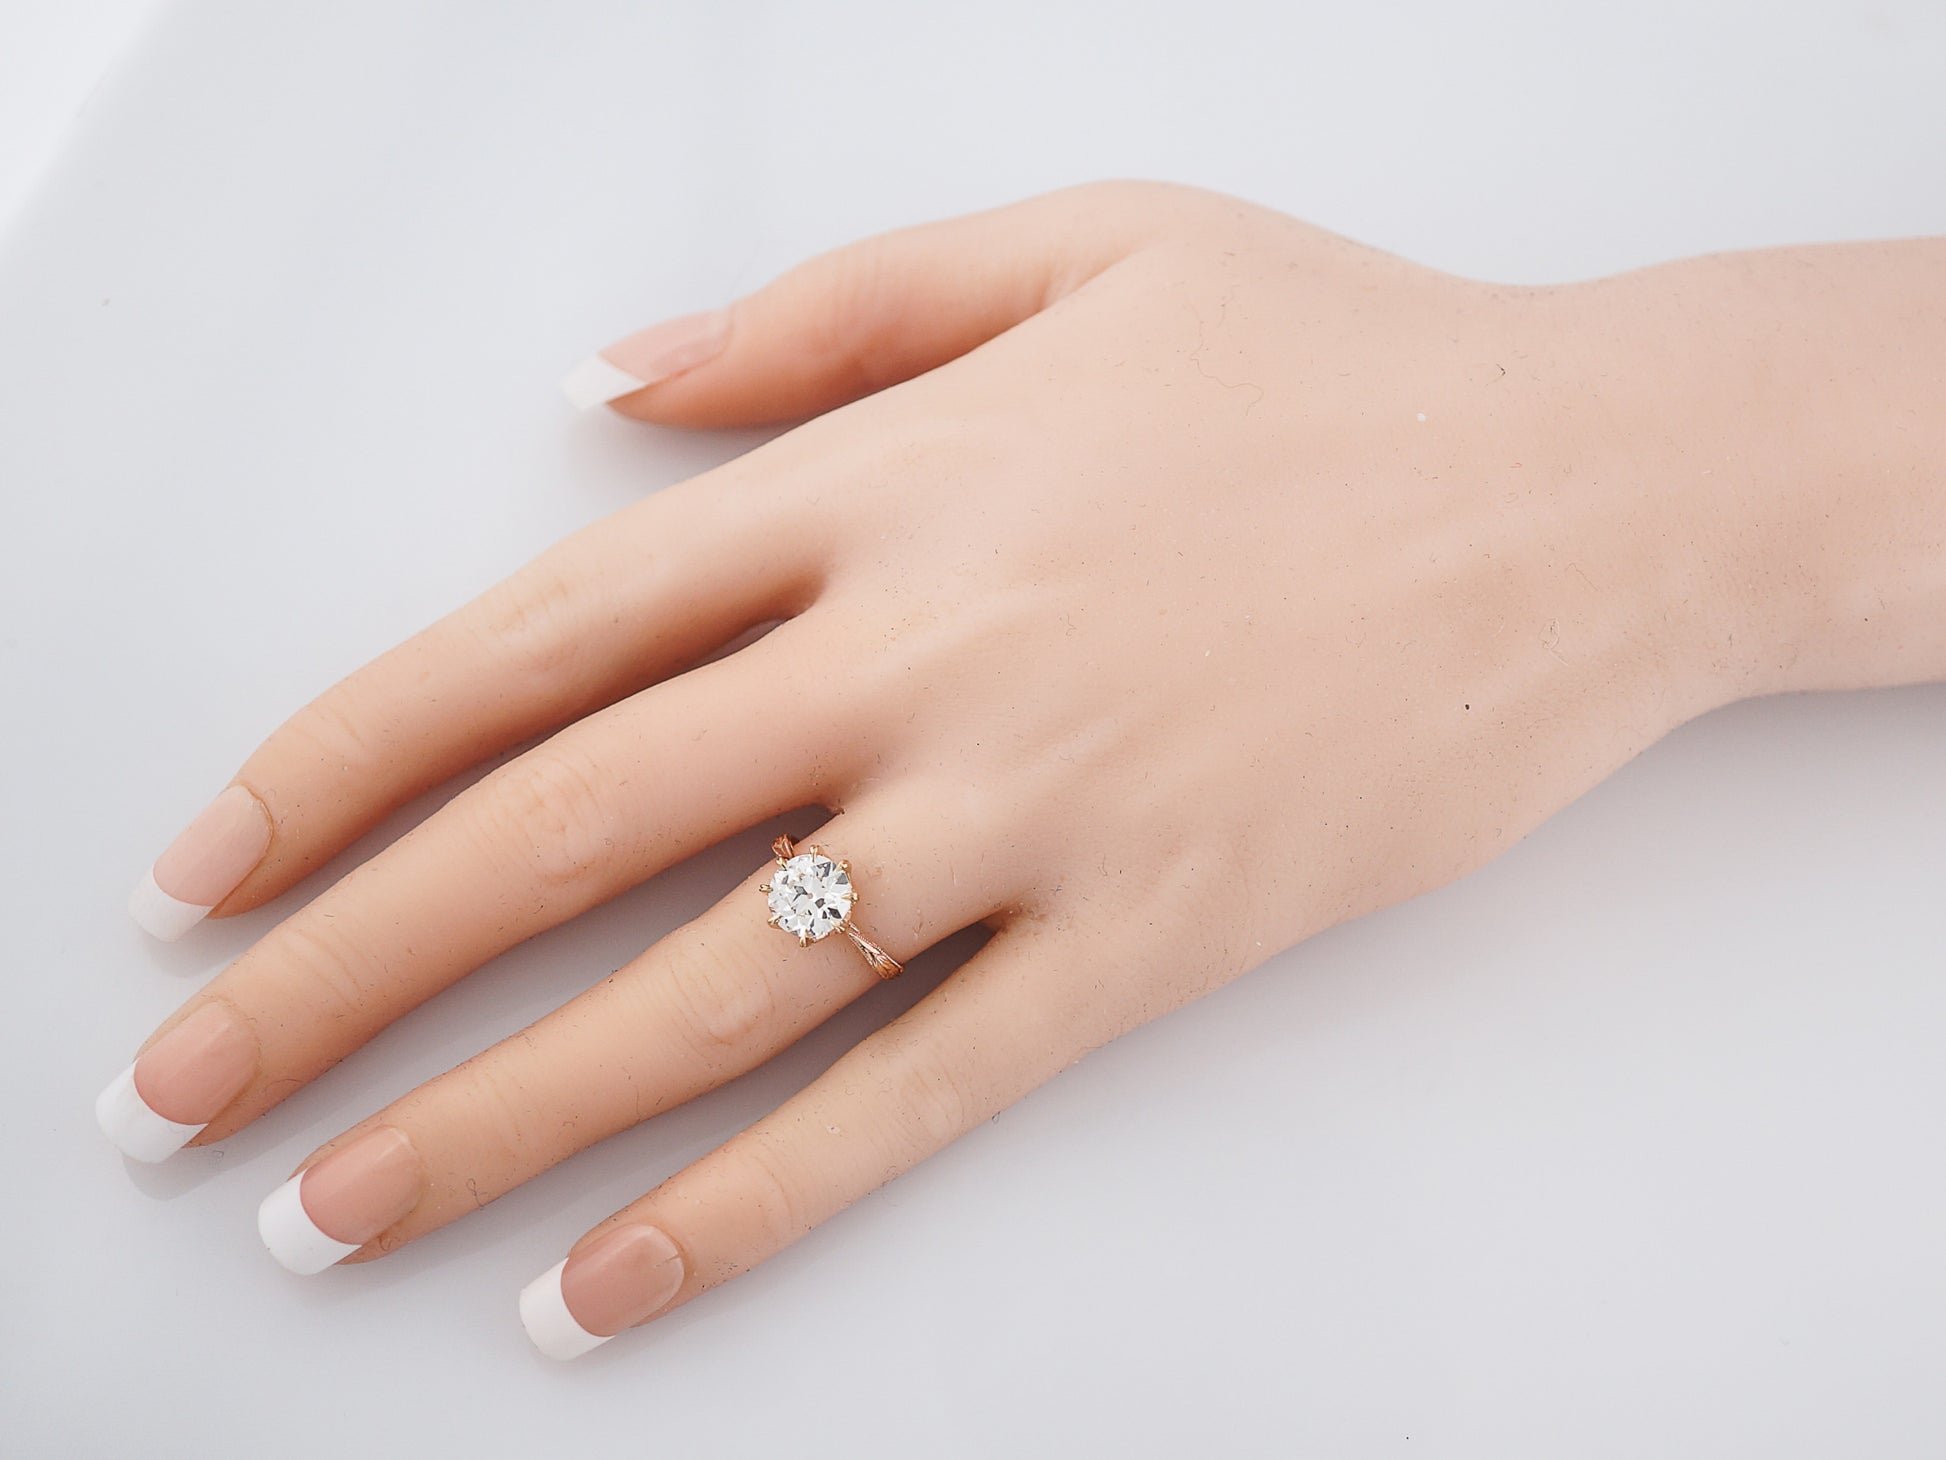 Rare 1.80 Carat Victorian Rose Gold Diamond Engagement Ring